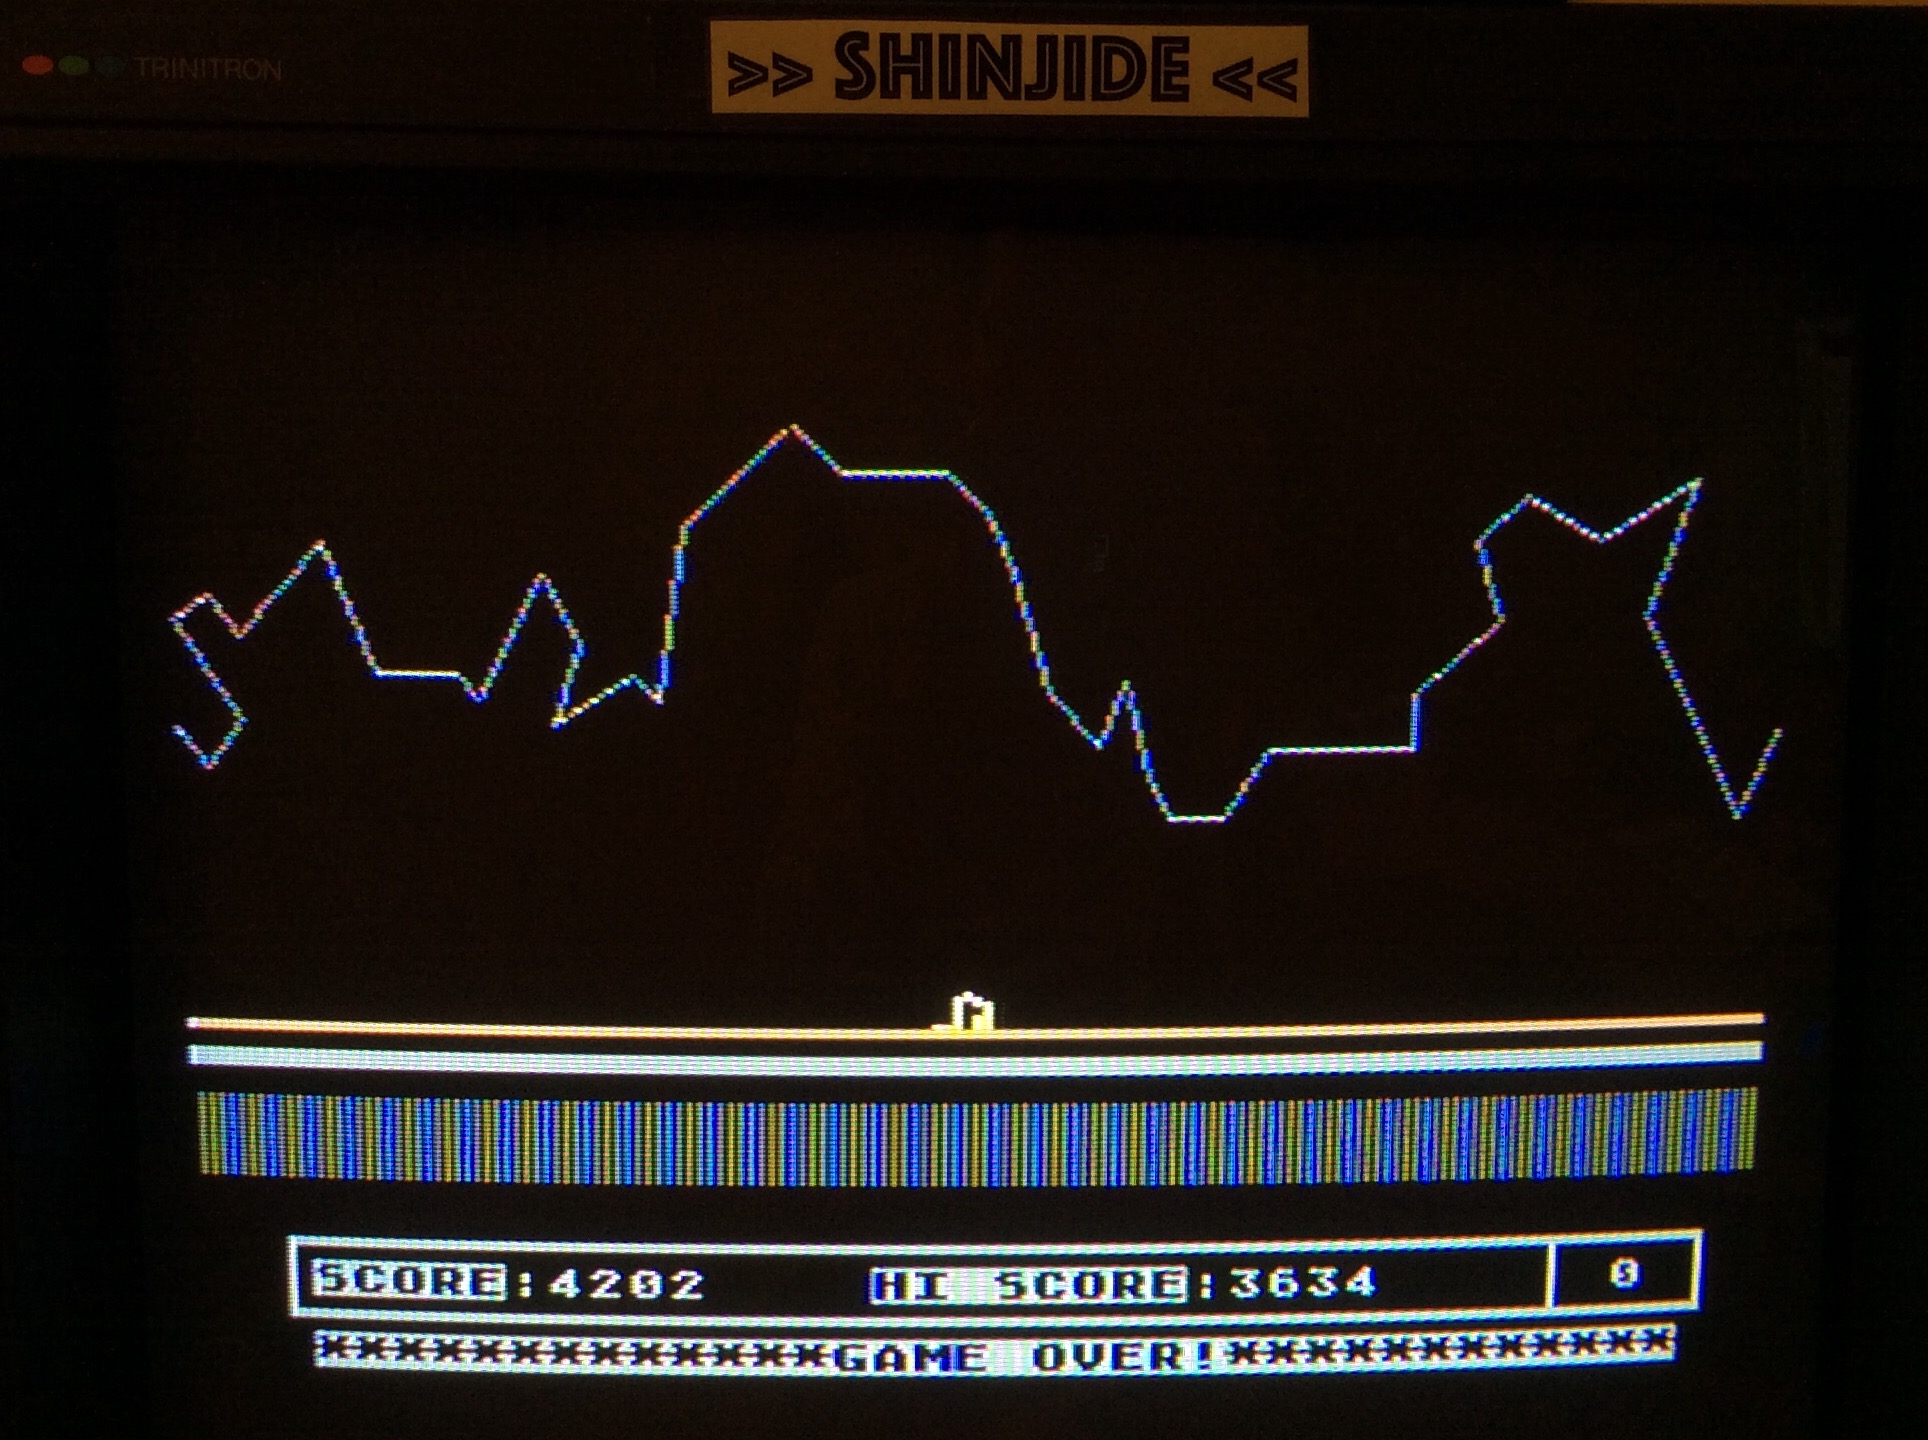 SHiNjide: Acrobat [Compute!] [Difficulty 1] (Atari 400/800/XL/XE) 4,202 points on 2015-11-16 13:57:07